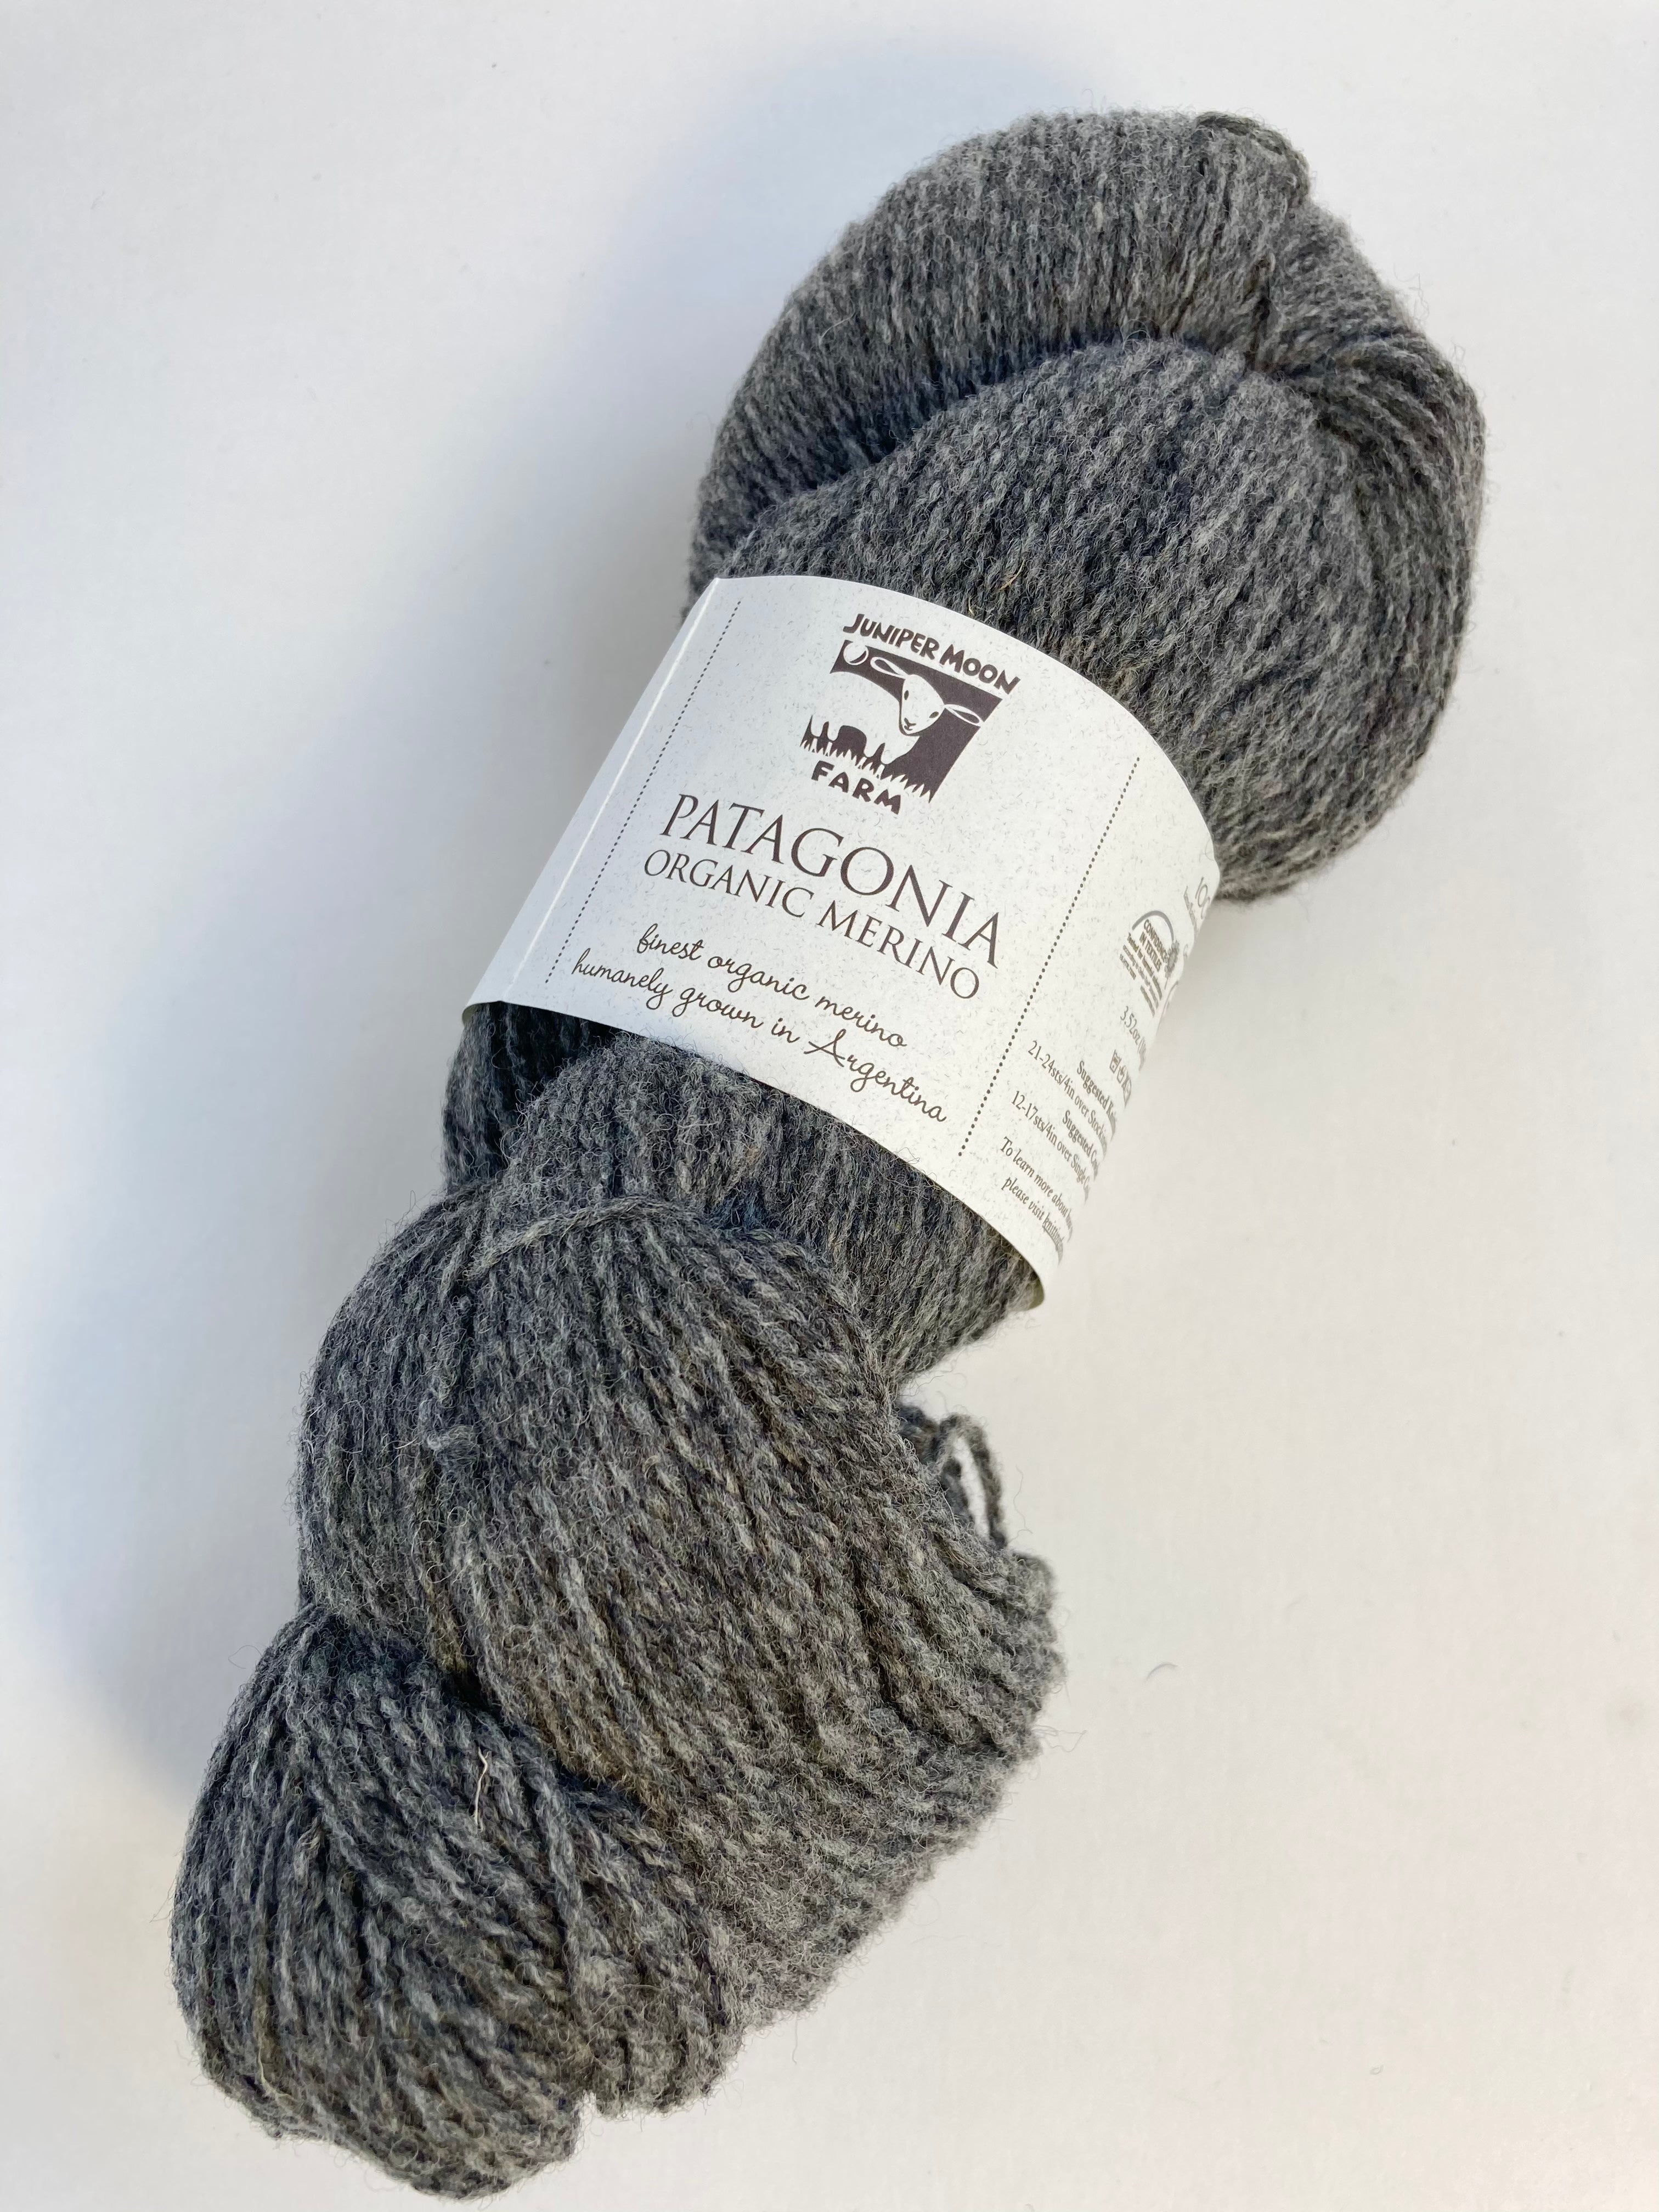 Smoked - Patagonia Organic Merino